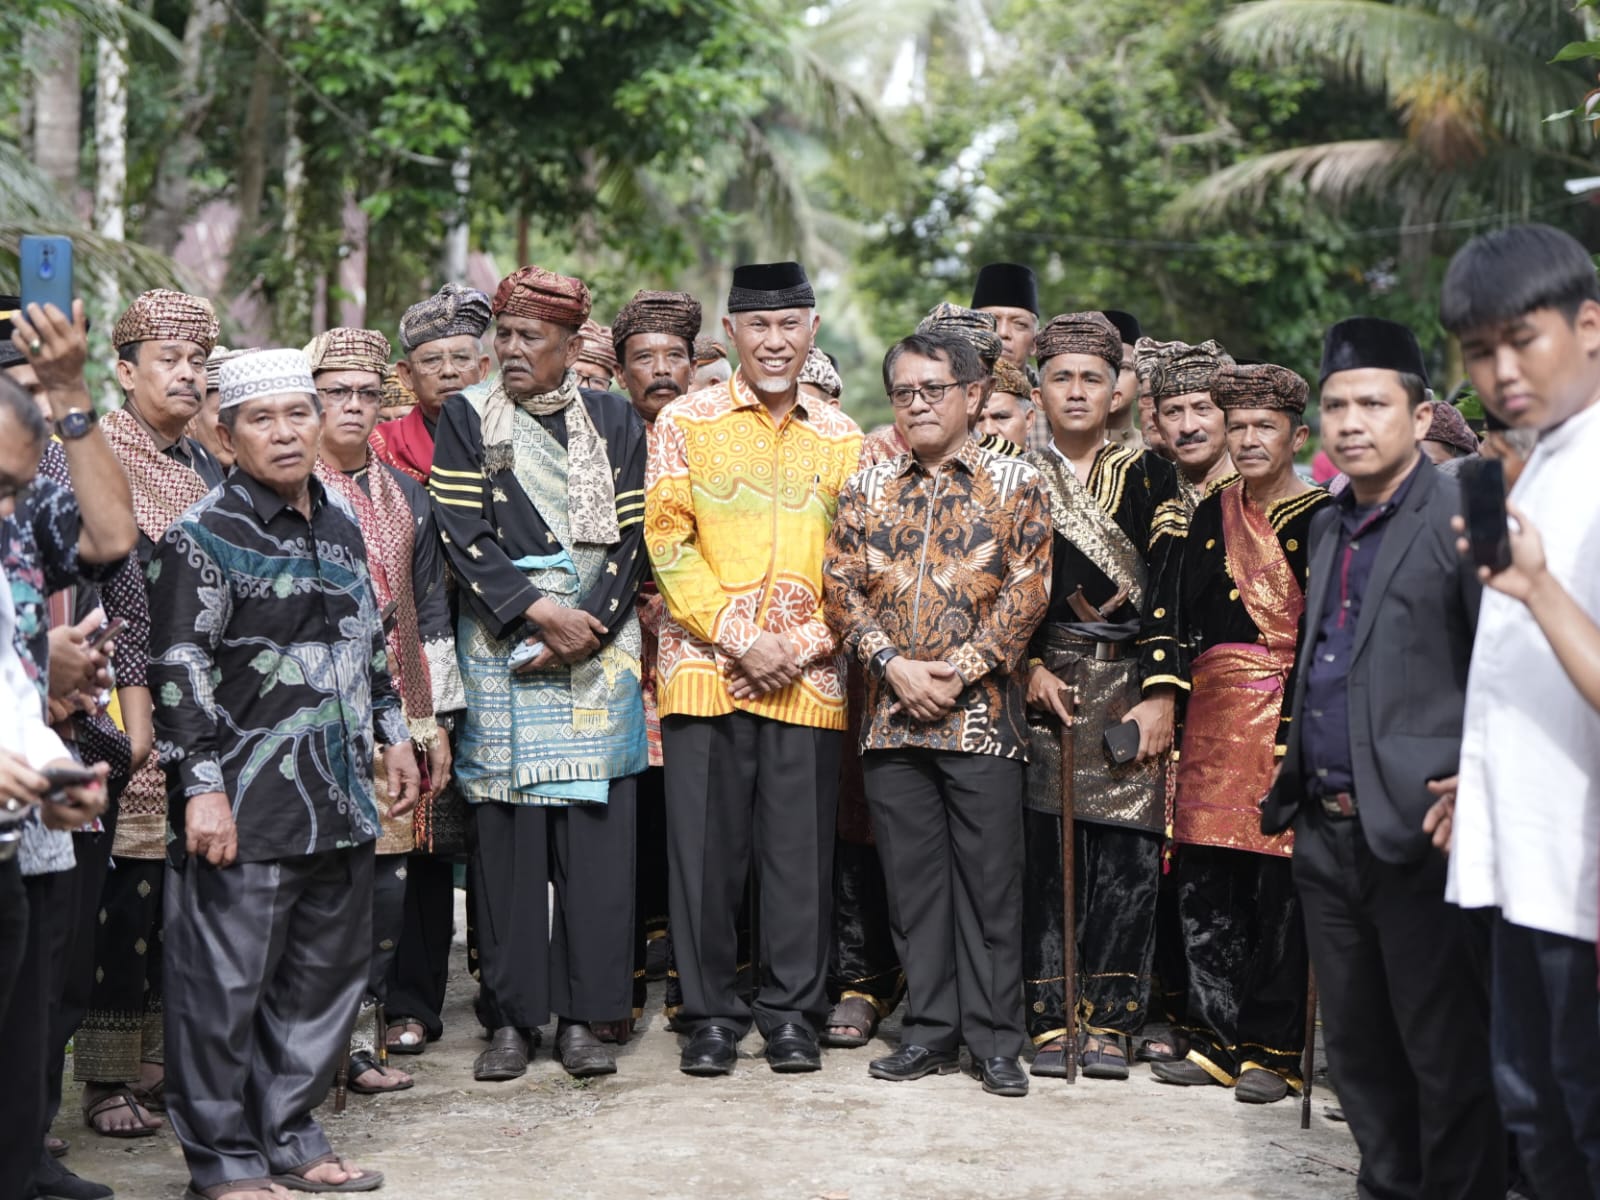 Gubernur Sumbar Mahyeldi, diantara Kaum Suku Piliang Sungai Lawai, Nagari Kuranji Hulu, Kabupaten Padang Pariaman. Foto Adpsb. 